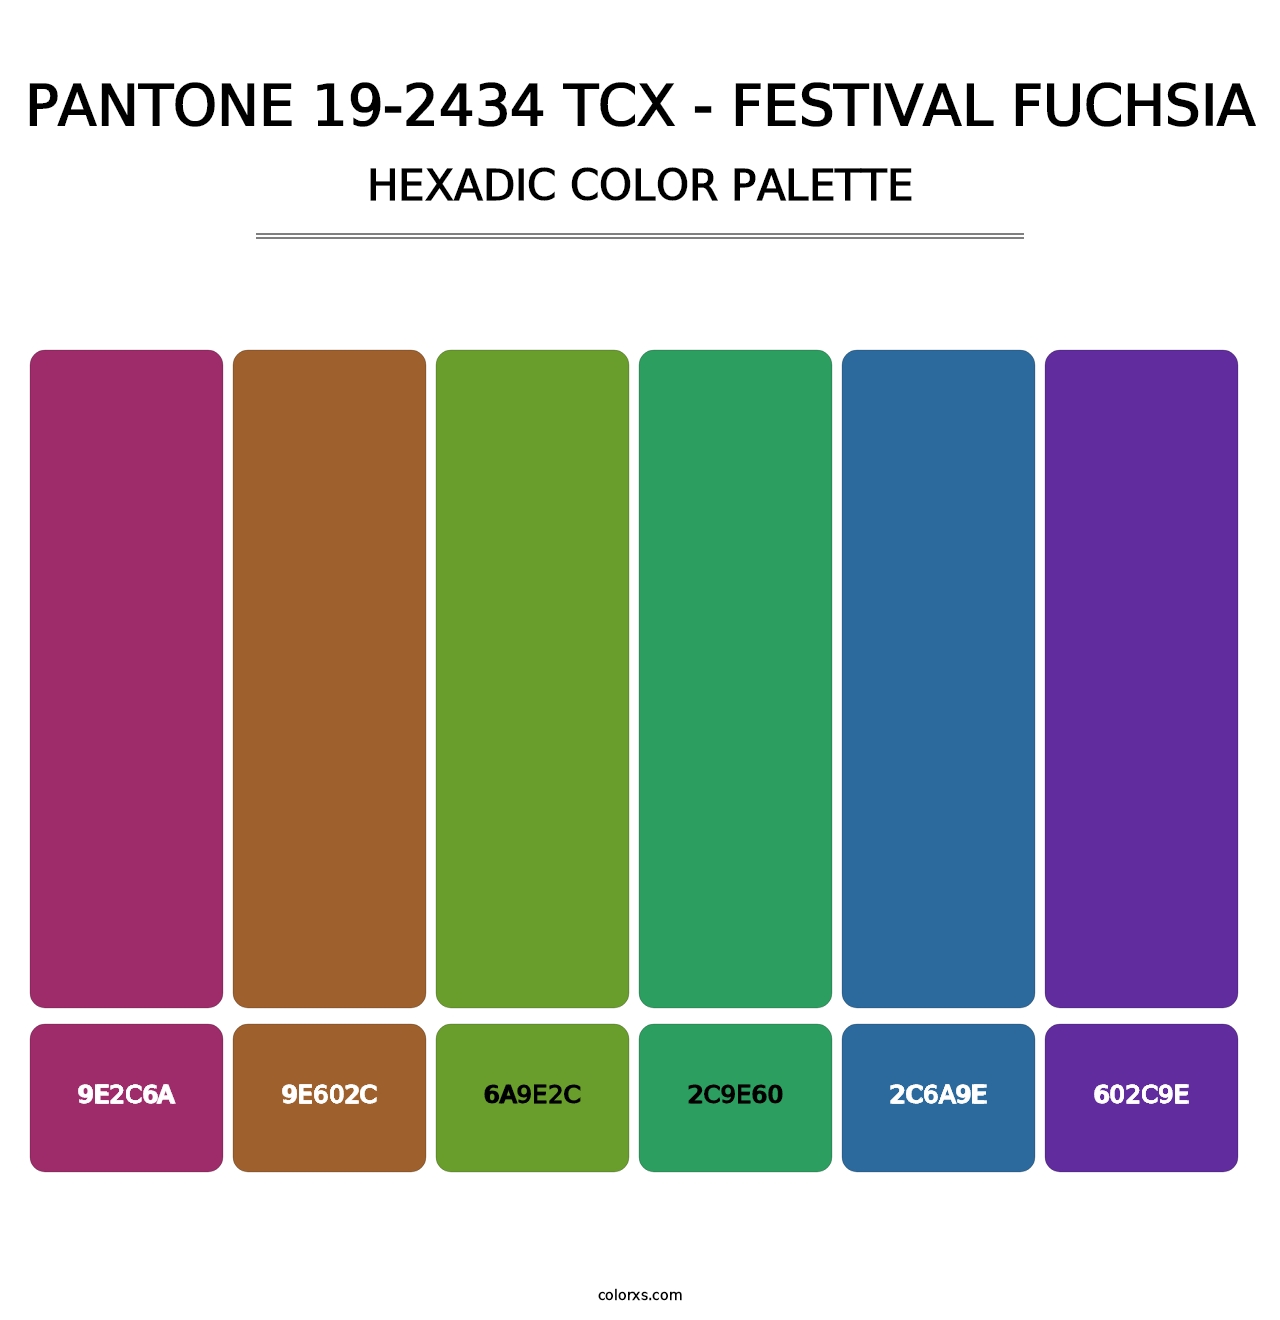 PANTONE 19-2434 TCX - Festival Fuchsia - Hexadic Color Palette